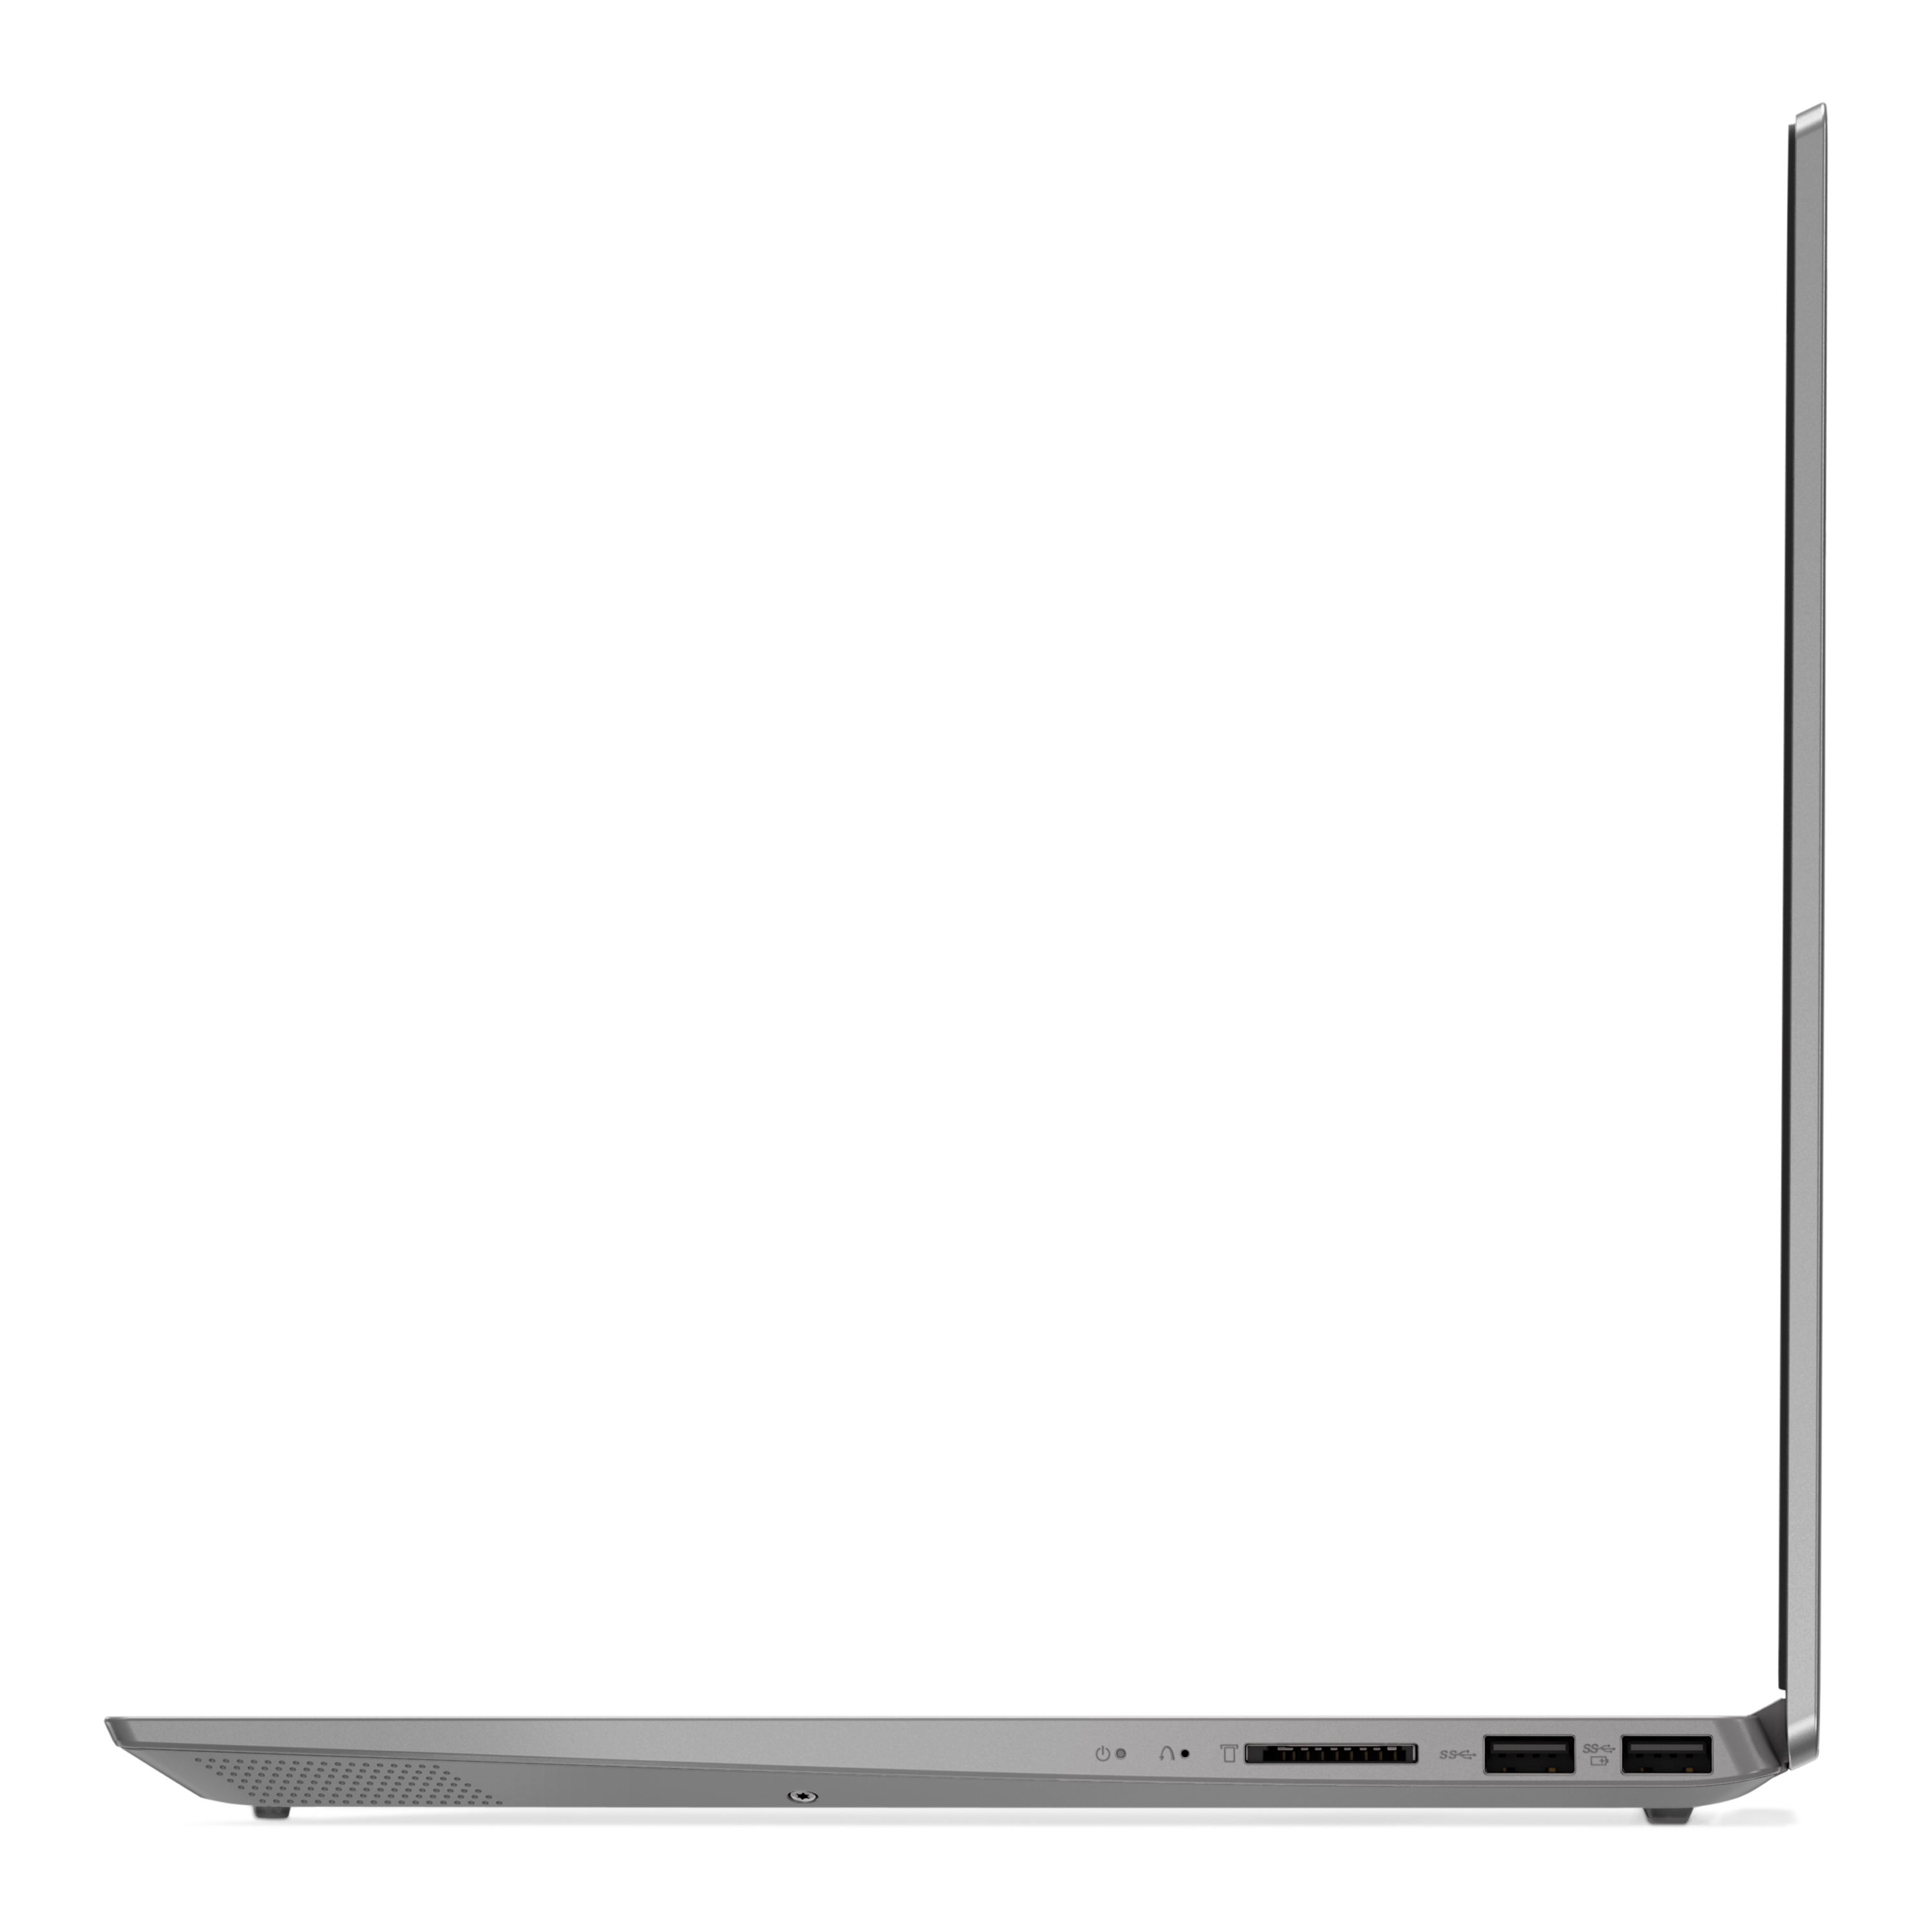 Lenovo ideapad S340 15.6" Laptop, Intel Core i3-8145U Dual-Core Processor, 8GB Memory, 128GB Solid State Drive, Windows 10 - Platinum Grey - 81N80092US - image 2 of 17